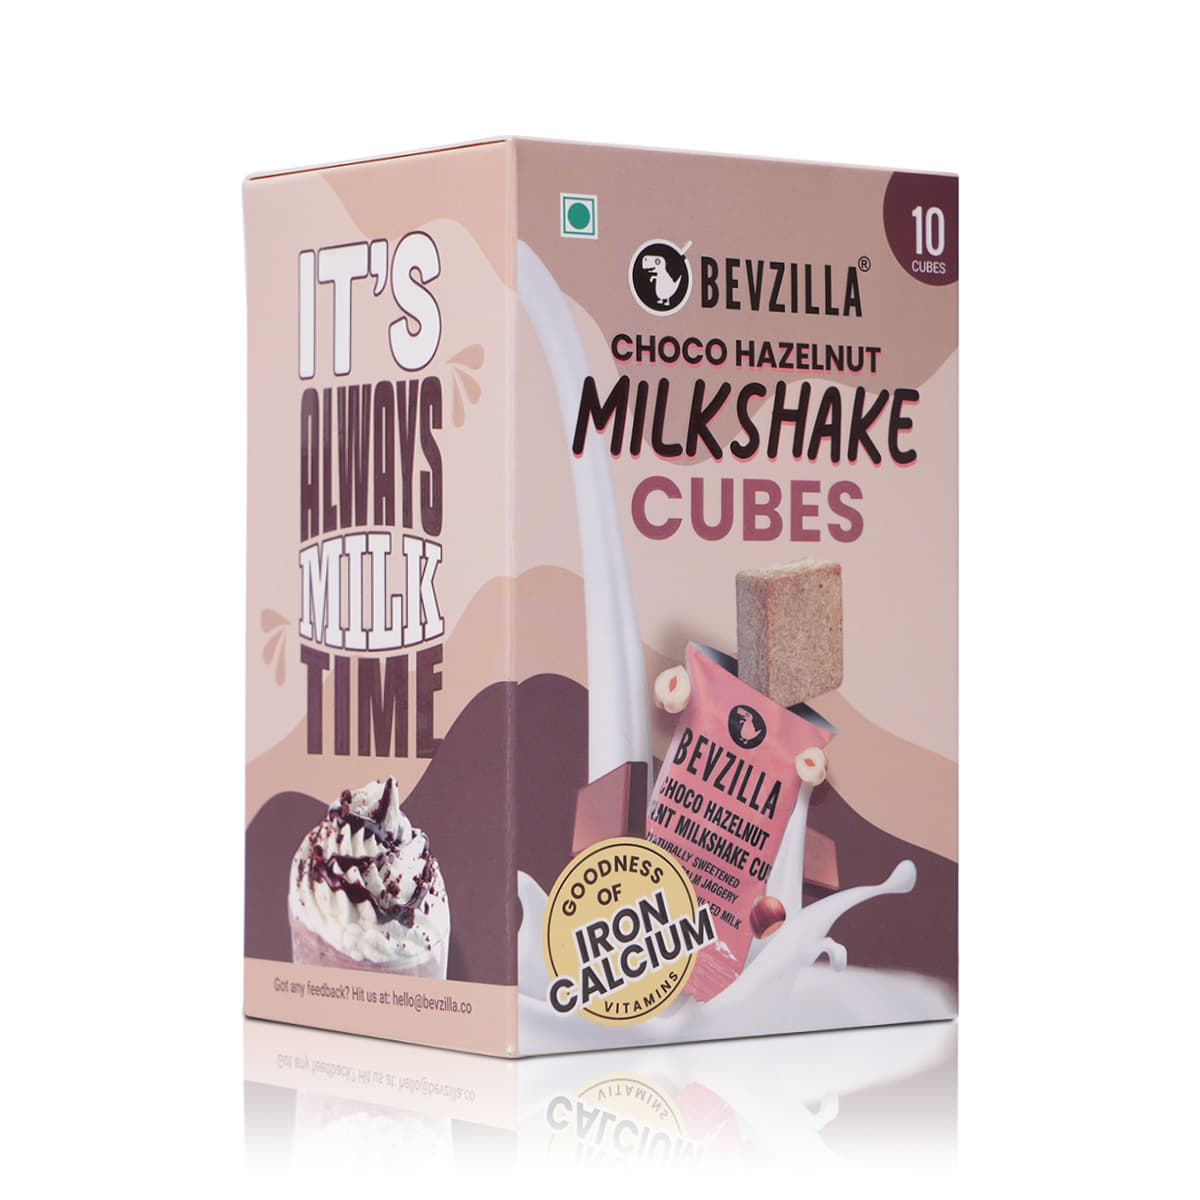 10 Choco Hazelnut Milkshake Cubes